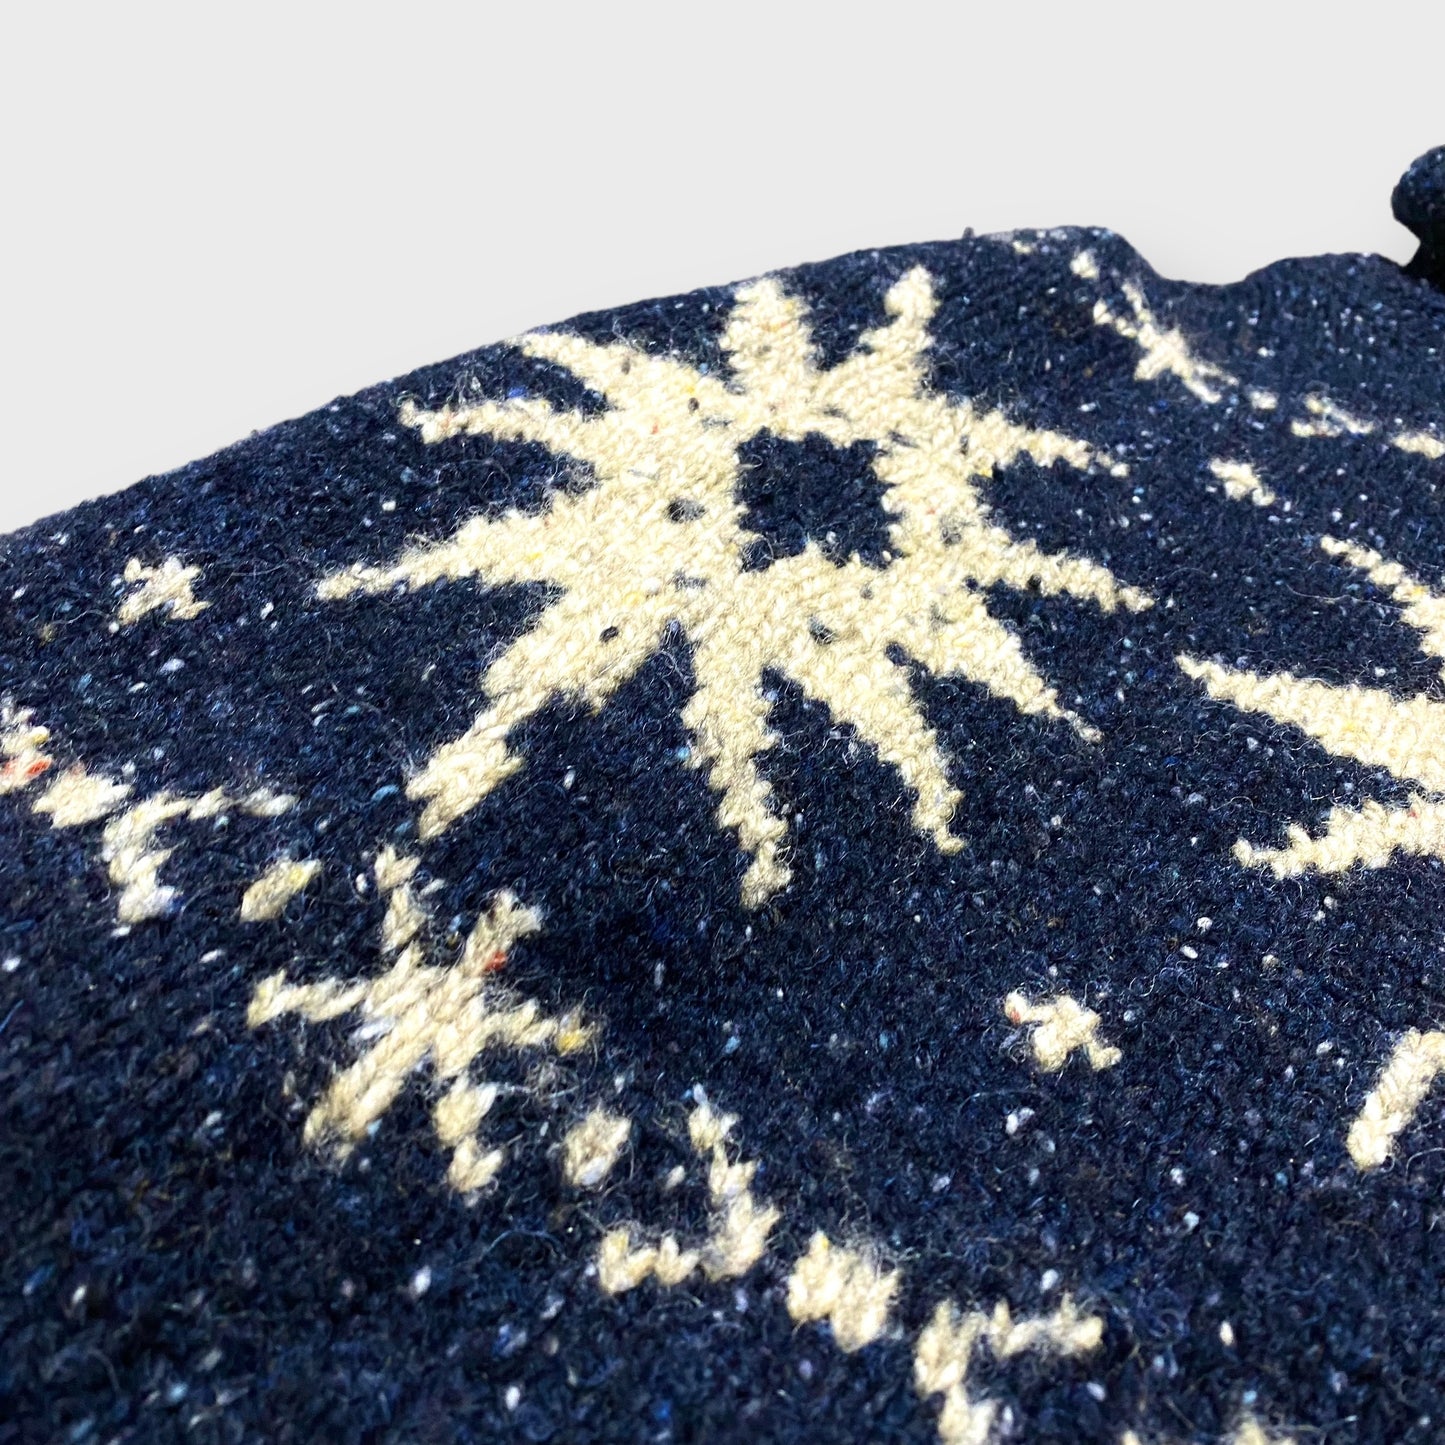 90's "HARVEY ROTHSCHILD" Nordic pattern high neck knit